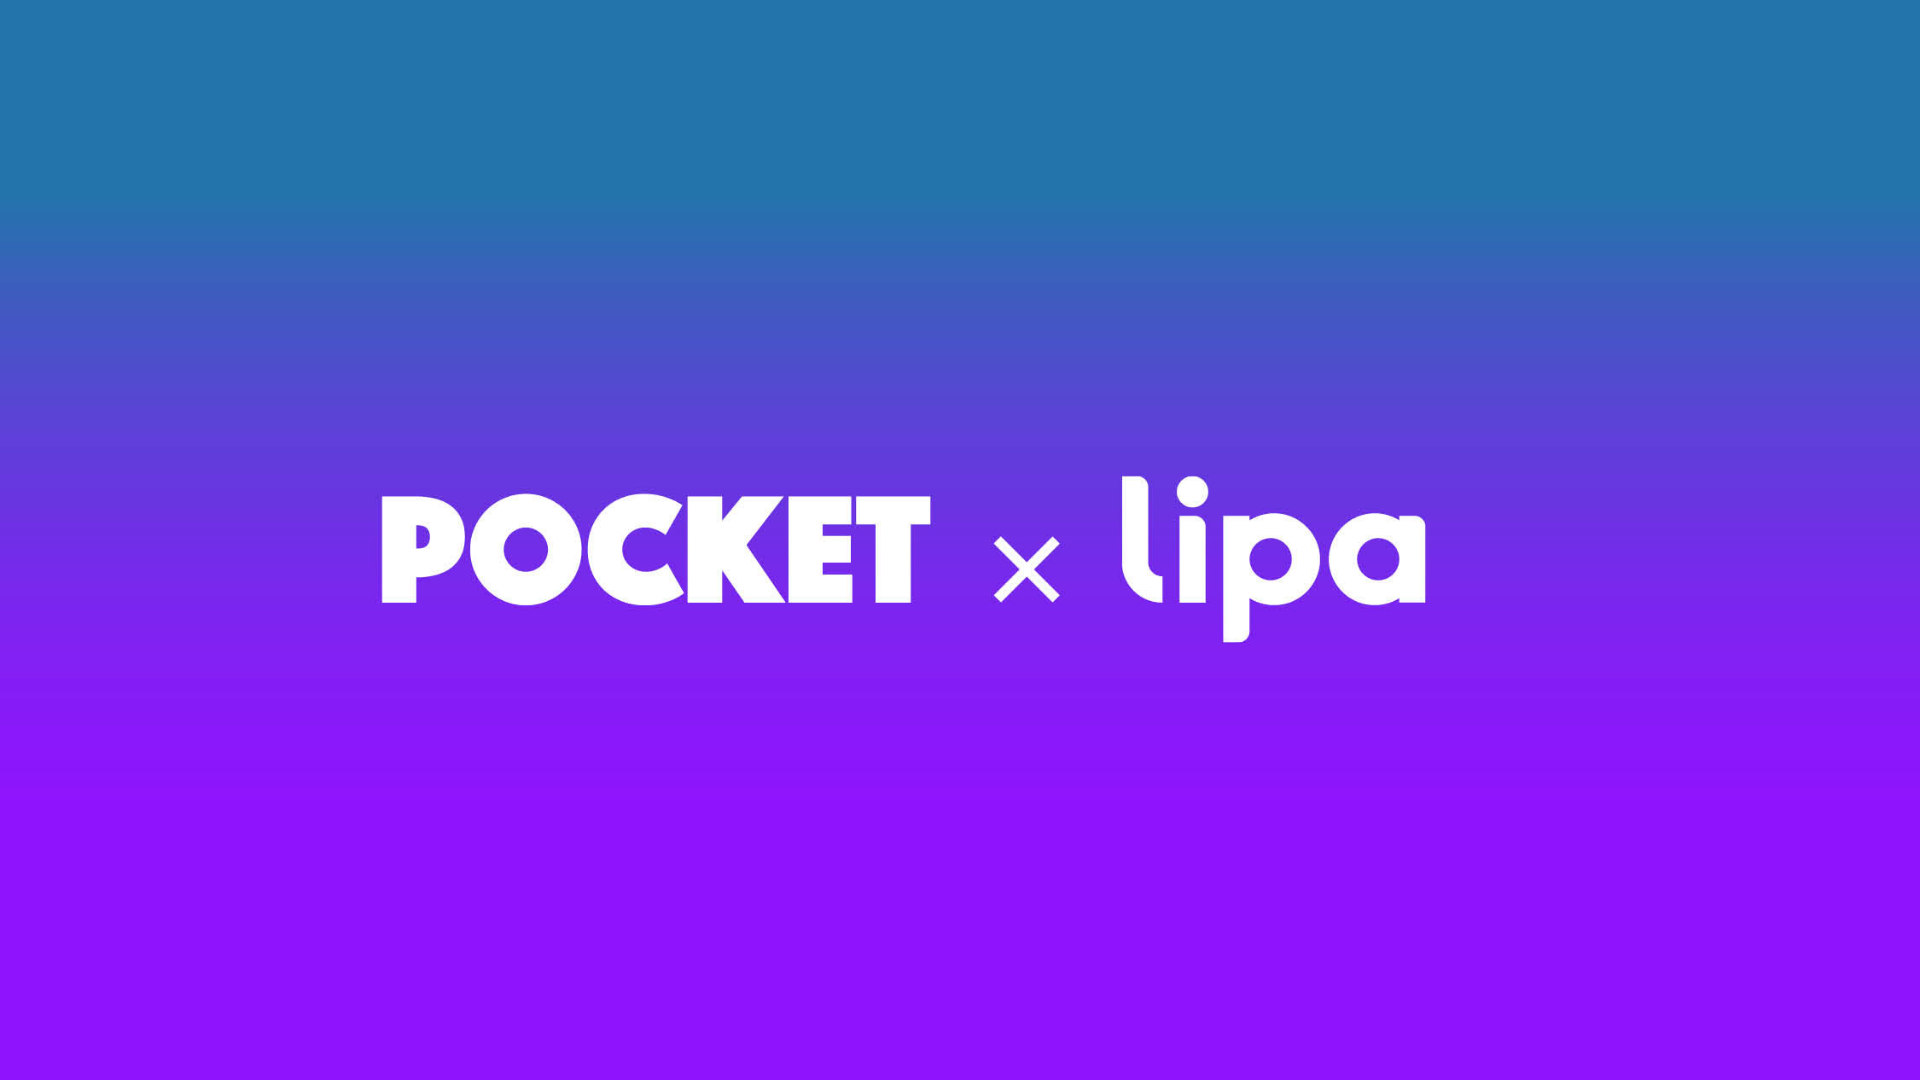 Pocket and lipa collaborate